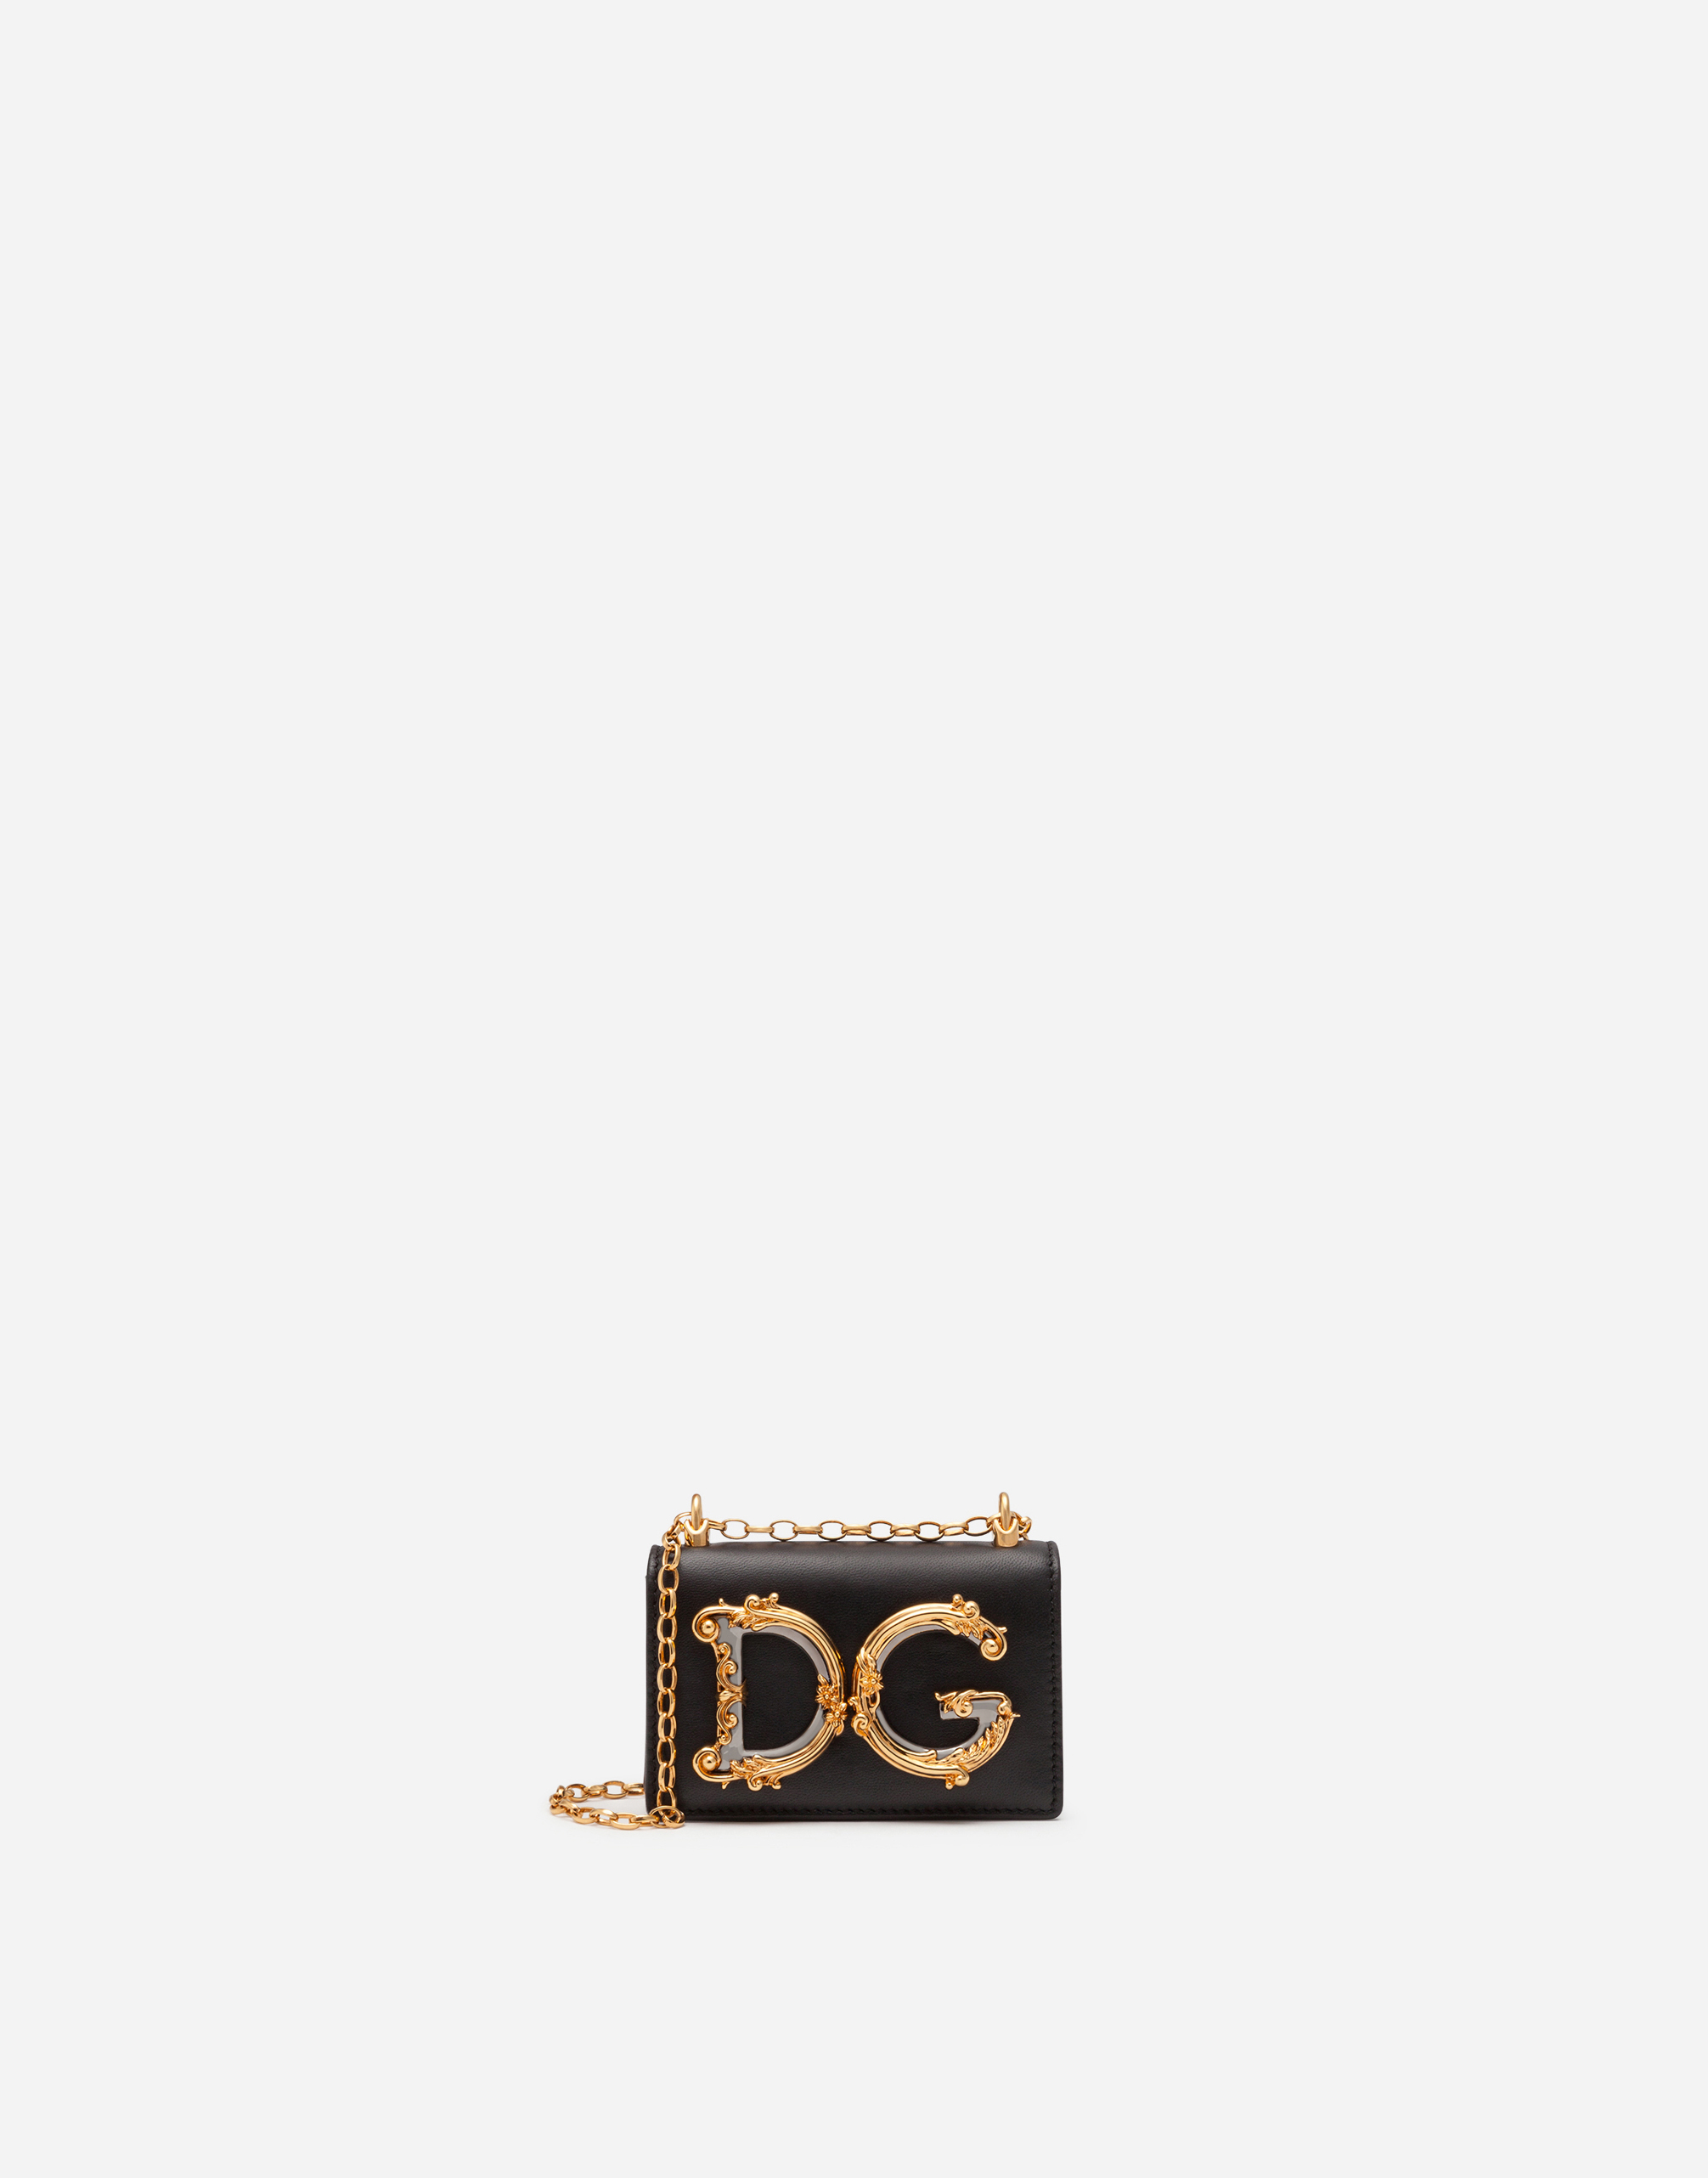 DG Girls micro bag in plain calfskin in Black